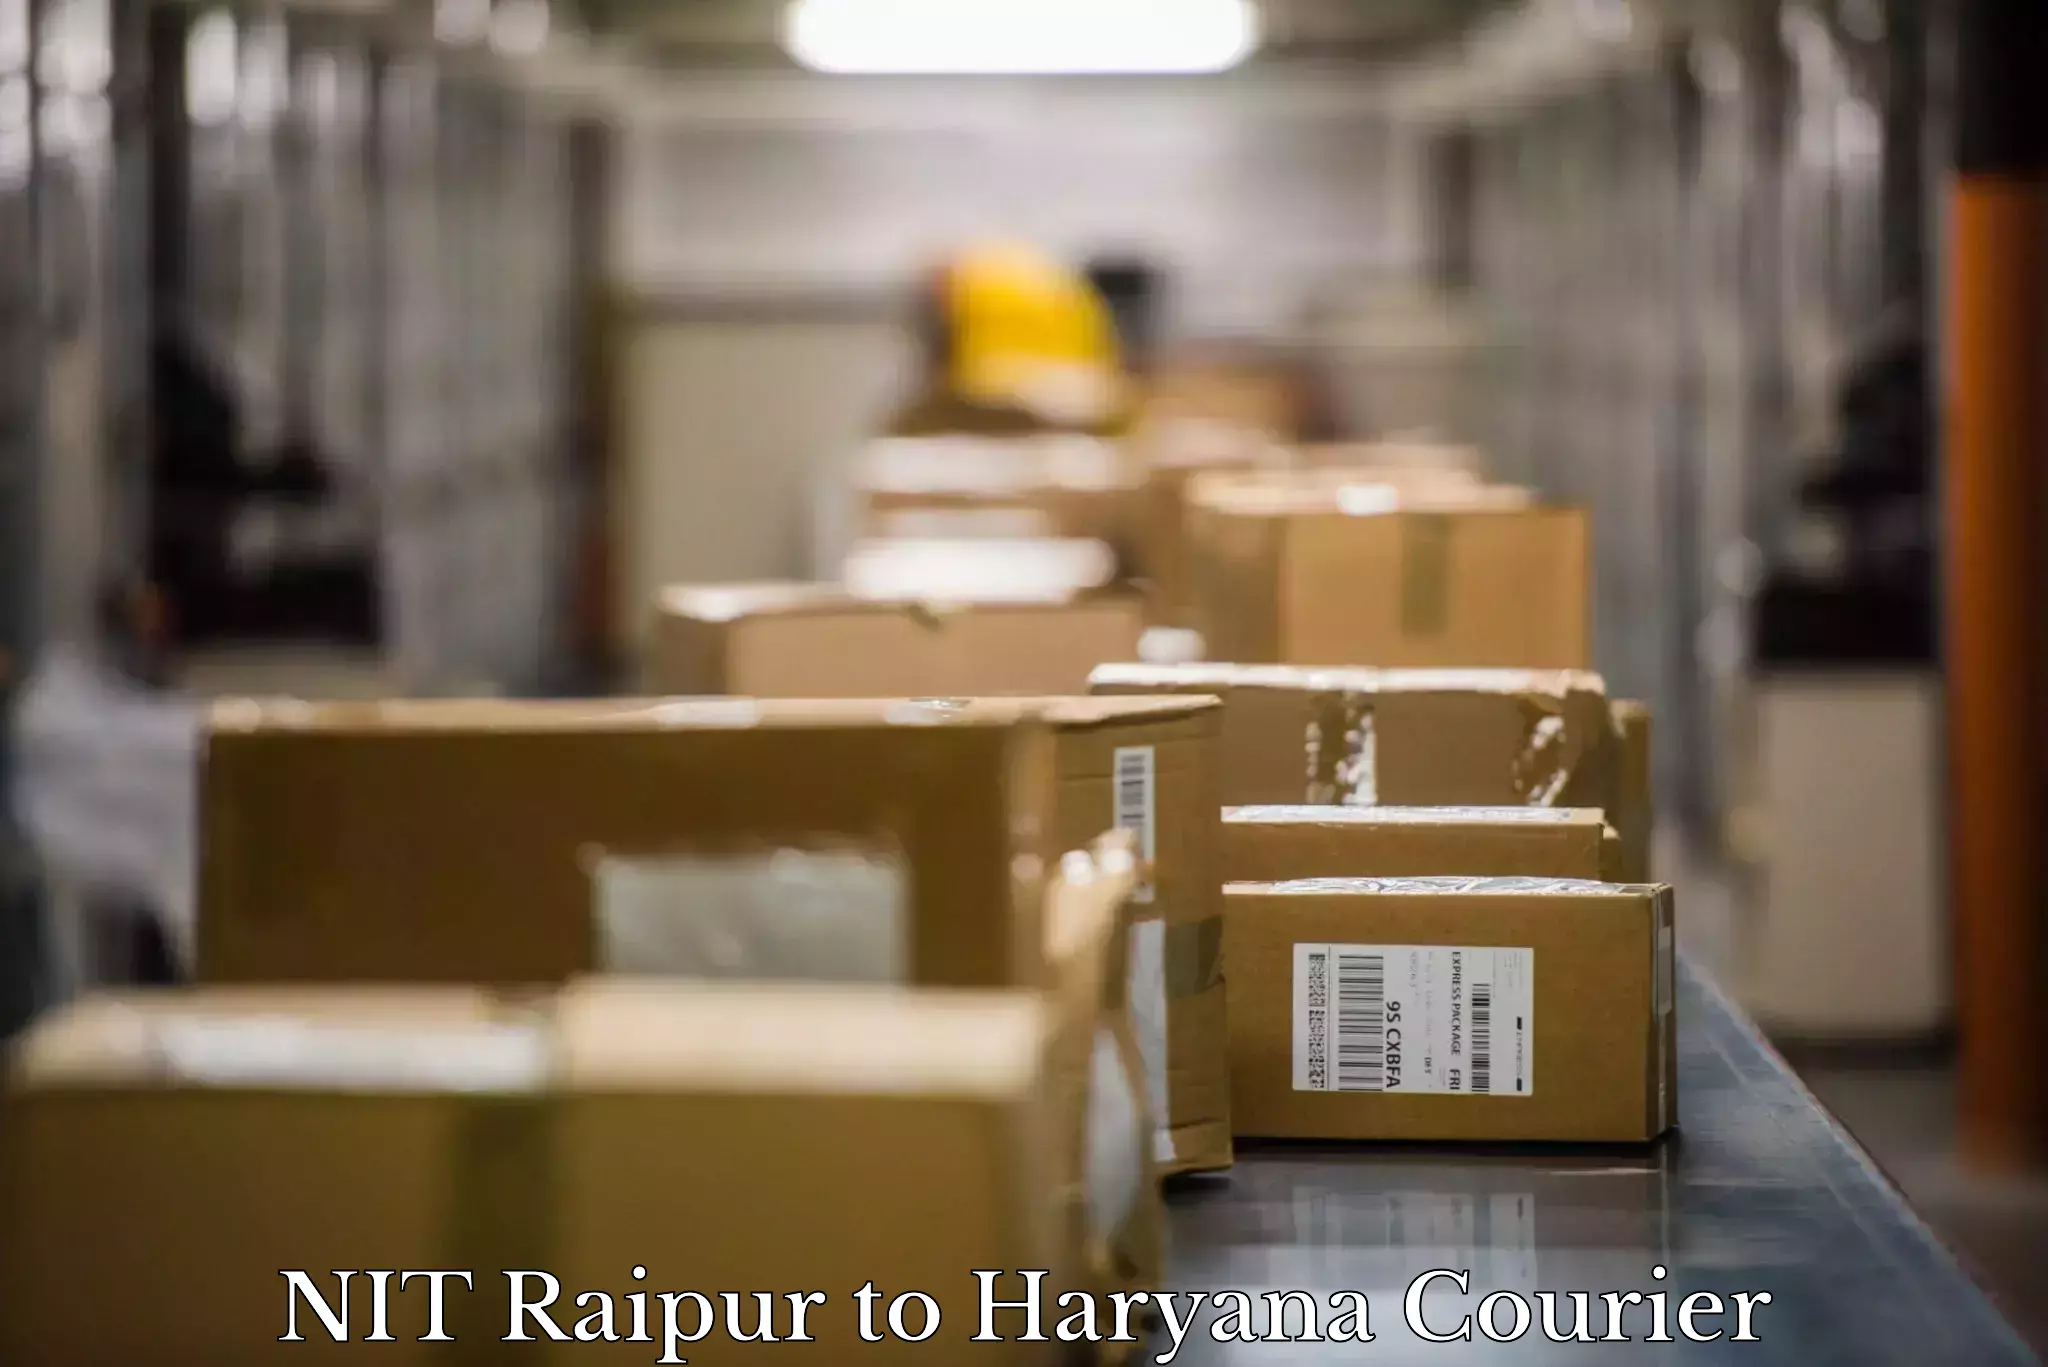 Trusted moving company NIT Raipur to Jhajjar